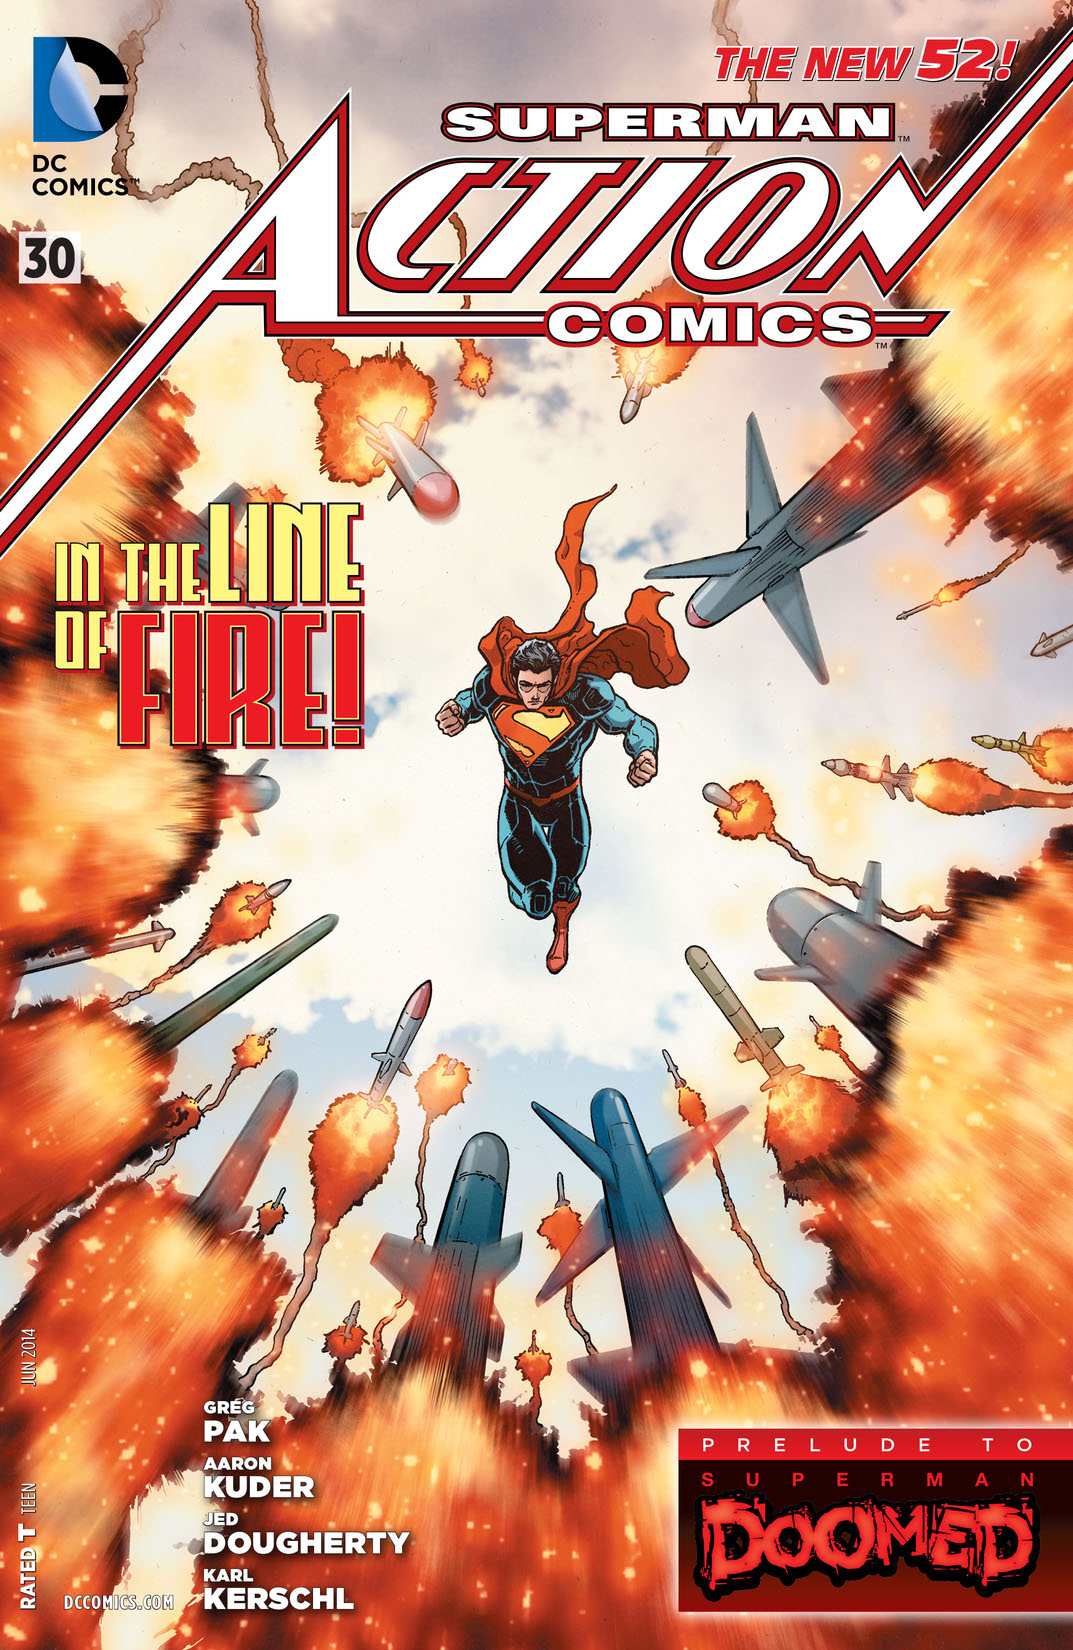 Action Comics (2011-) #30 preview images